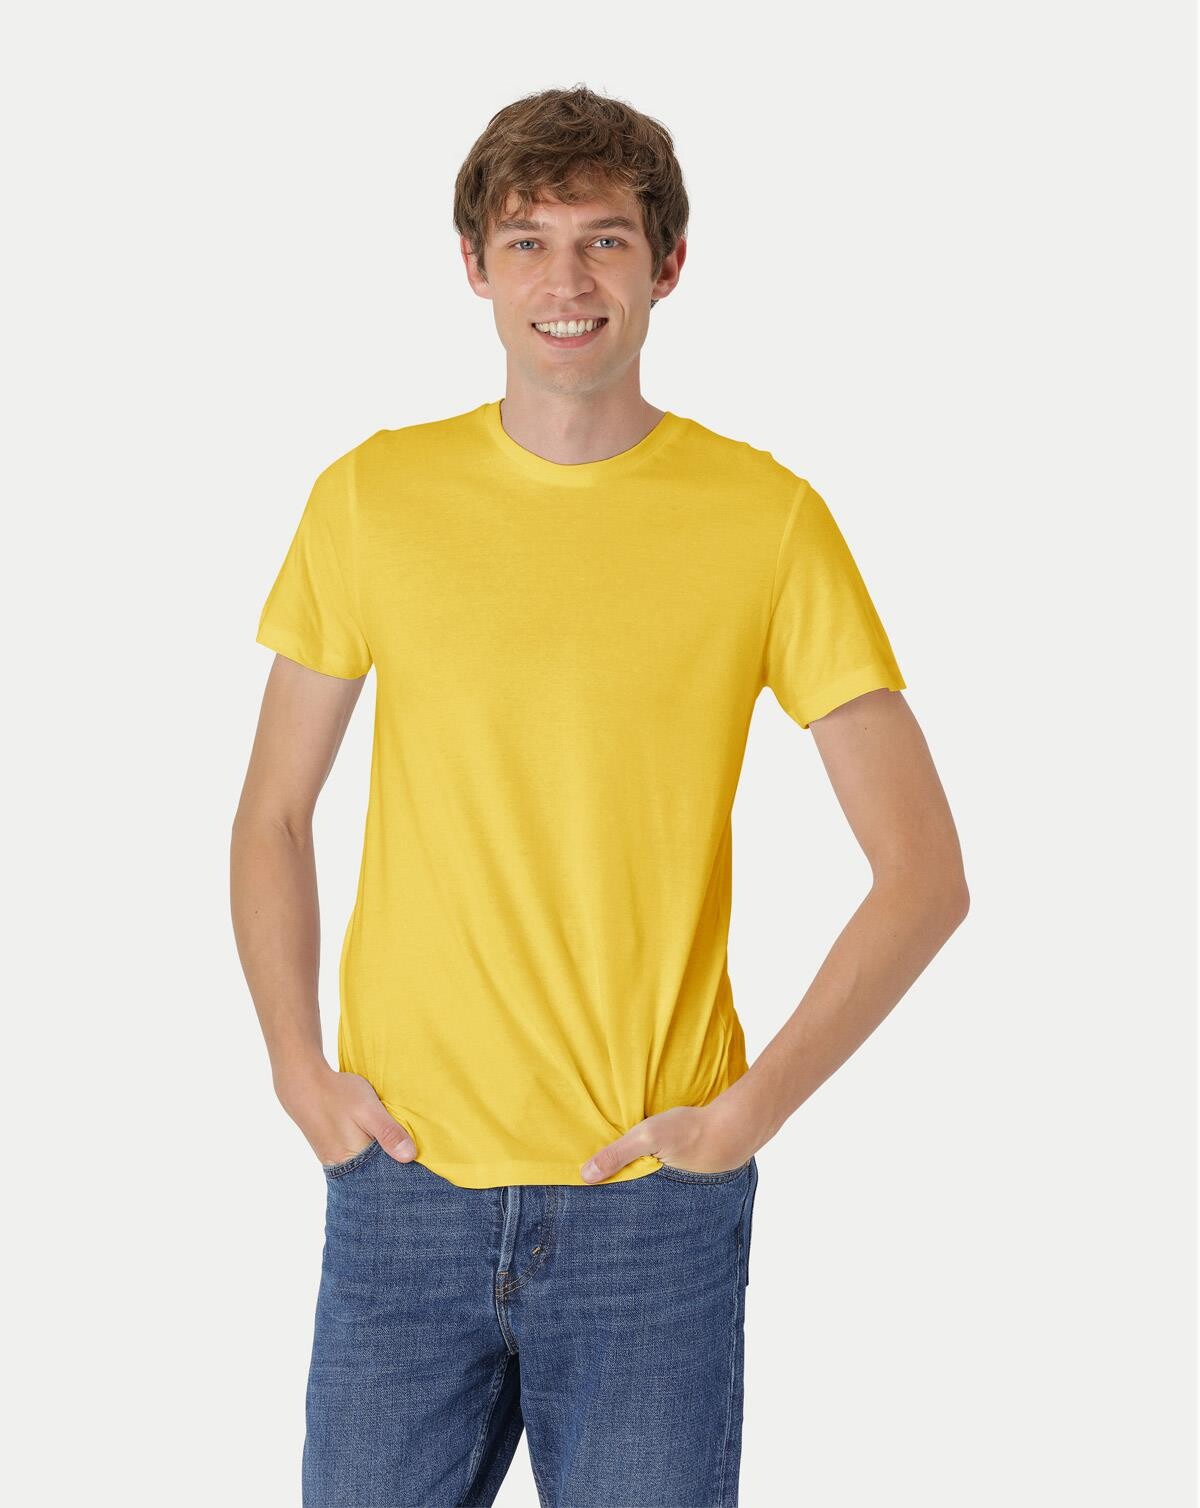 Neutral Økologisk T-shirt til - Tætsiddende (Gul, L)